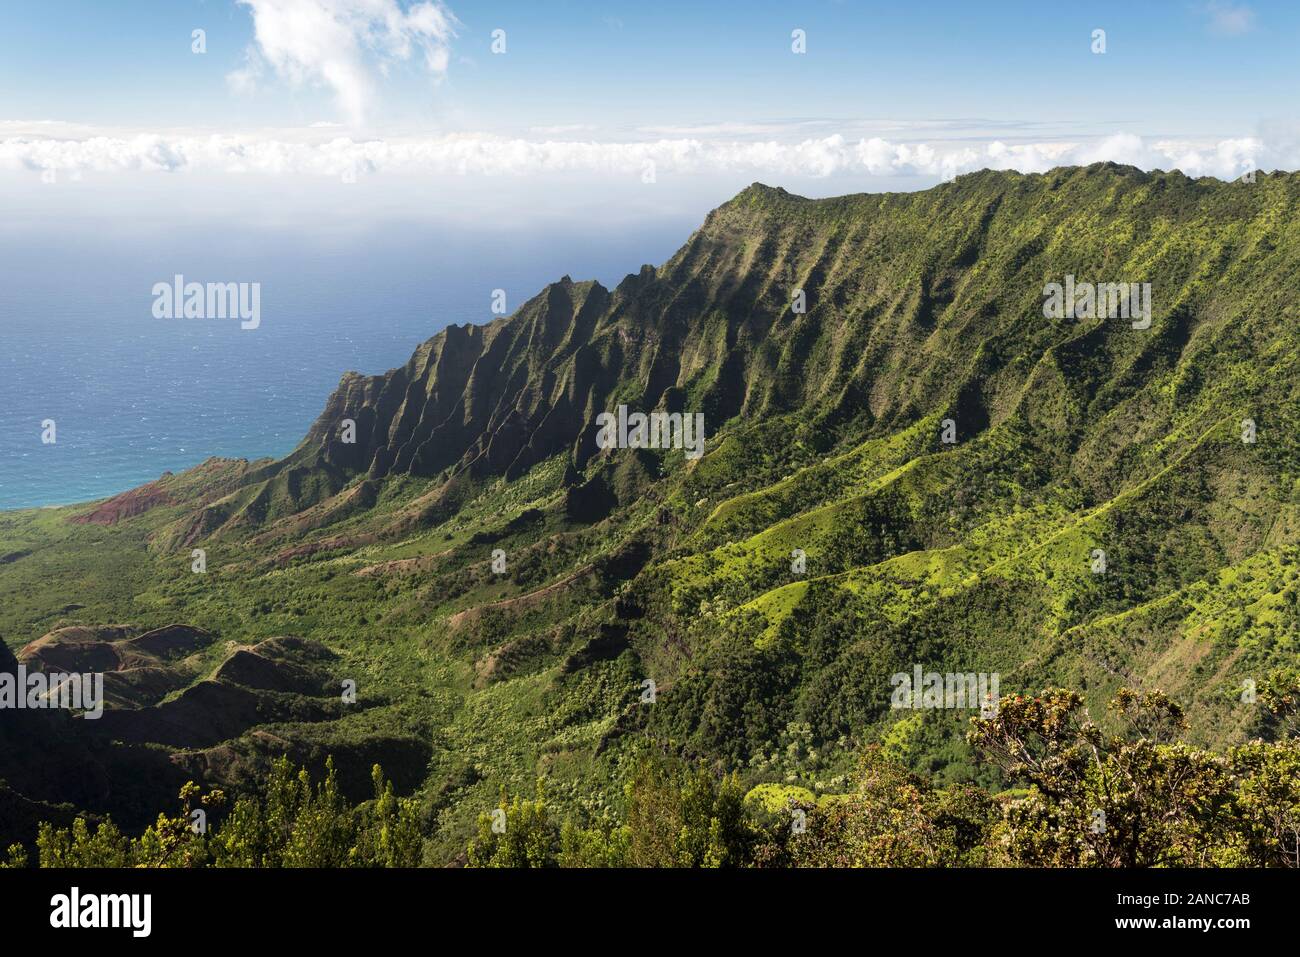 La Valle Kalalau, che si apre con una vista dell'Oceano Pacifico sulla Nā Costa Pali, Kauai Hawaii. Foto Stock